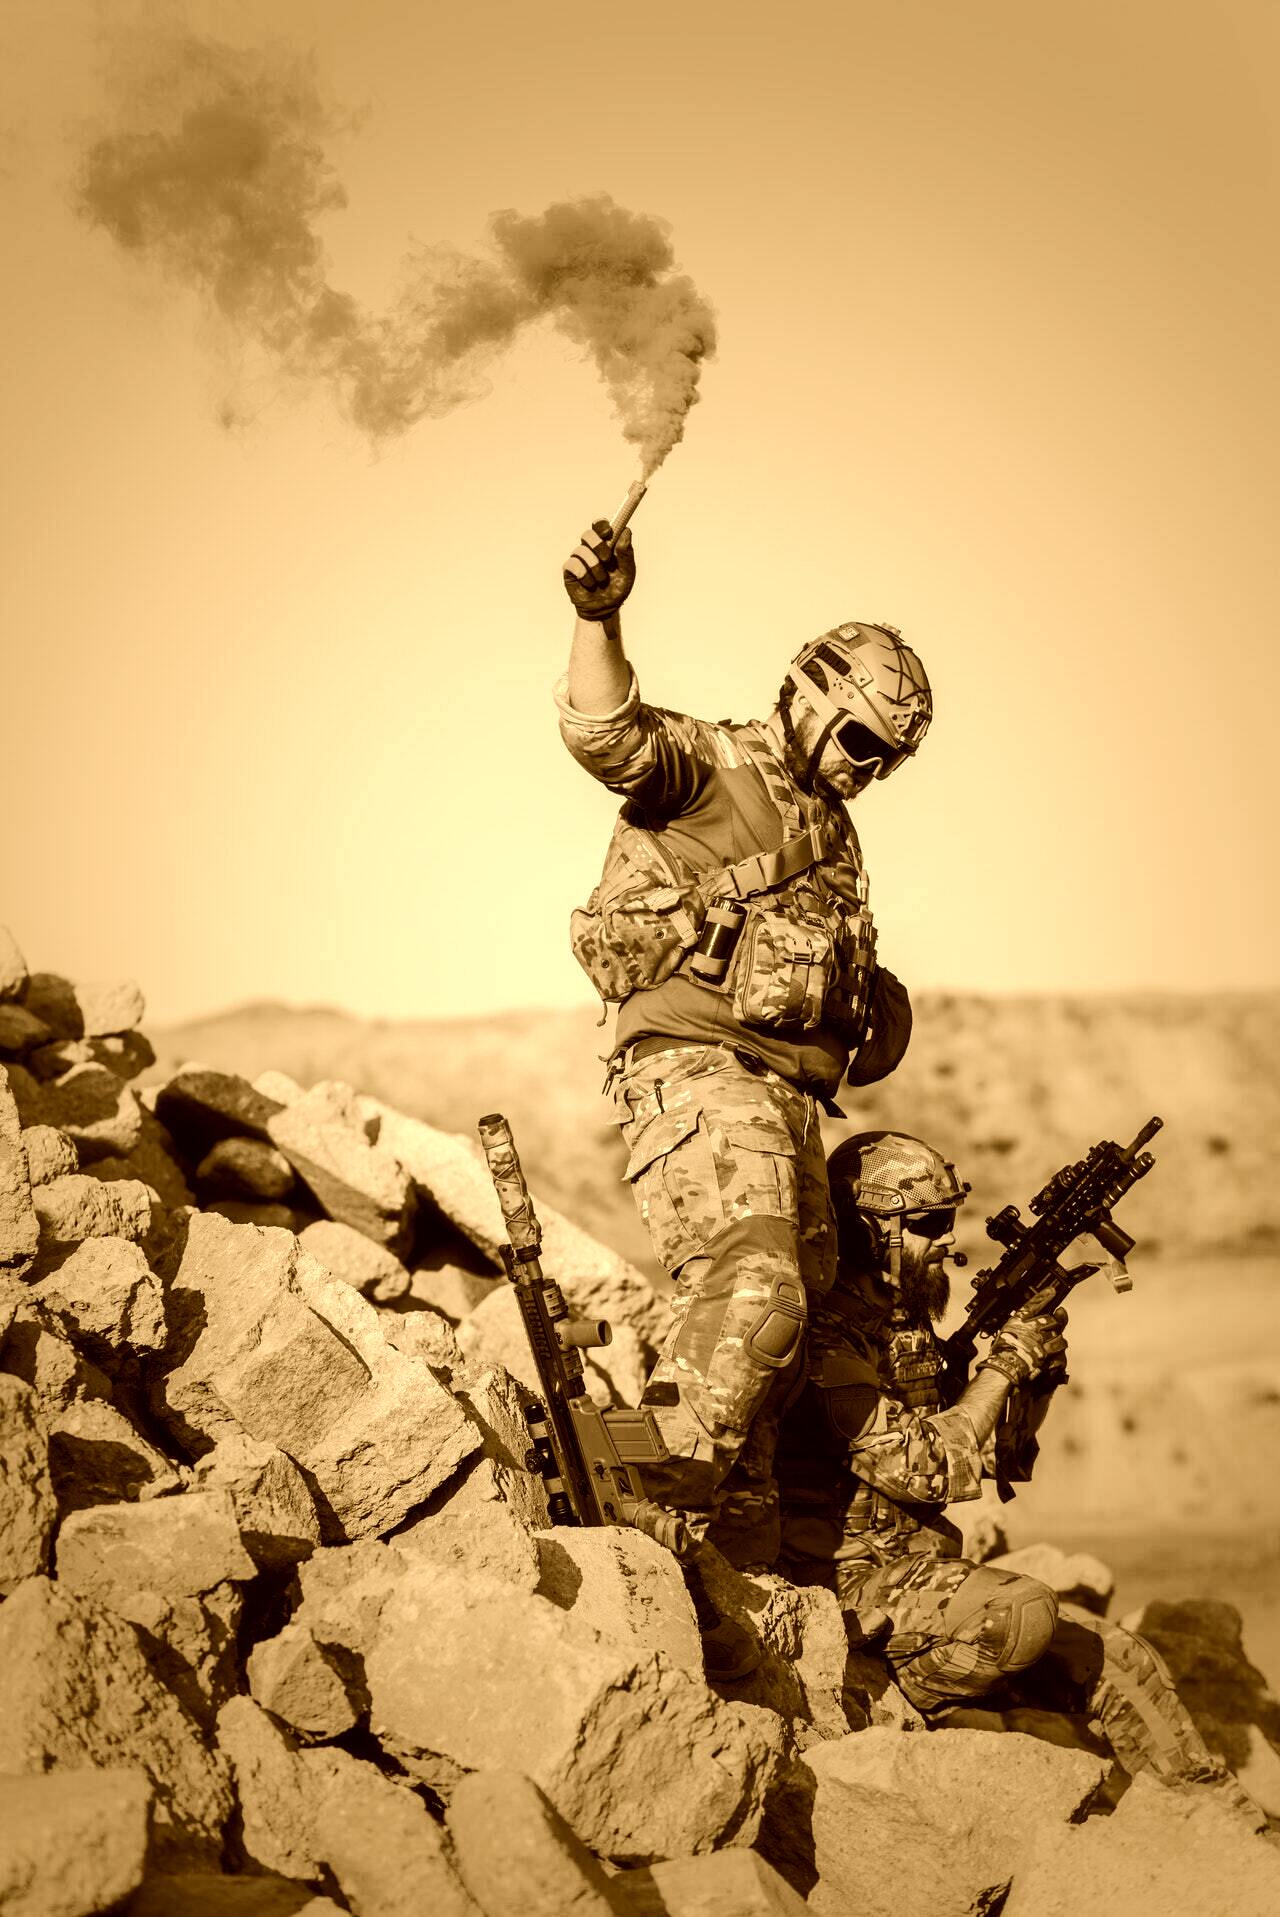 Imagen antigua de un soldado en plena guerra. | Foto: Pexels